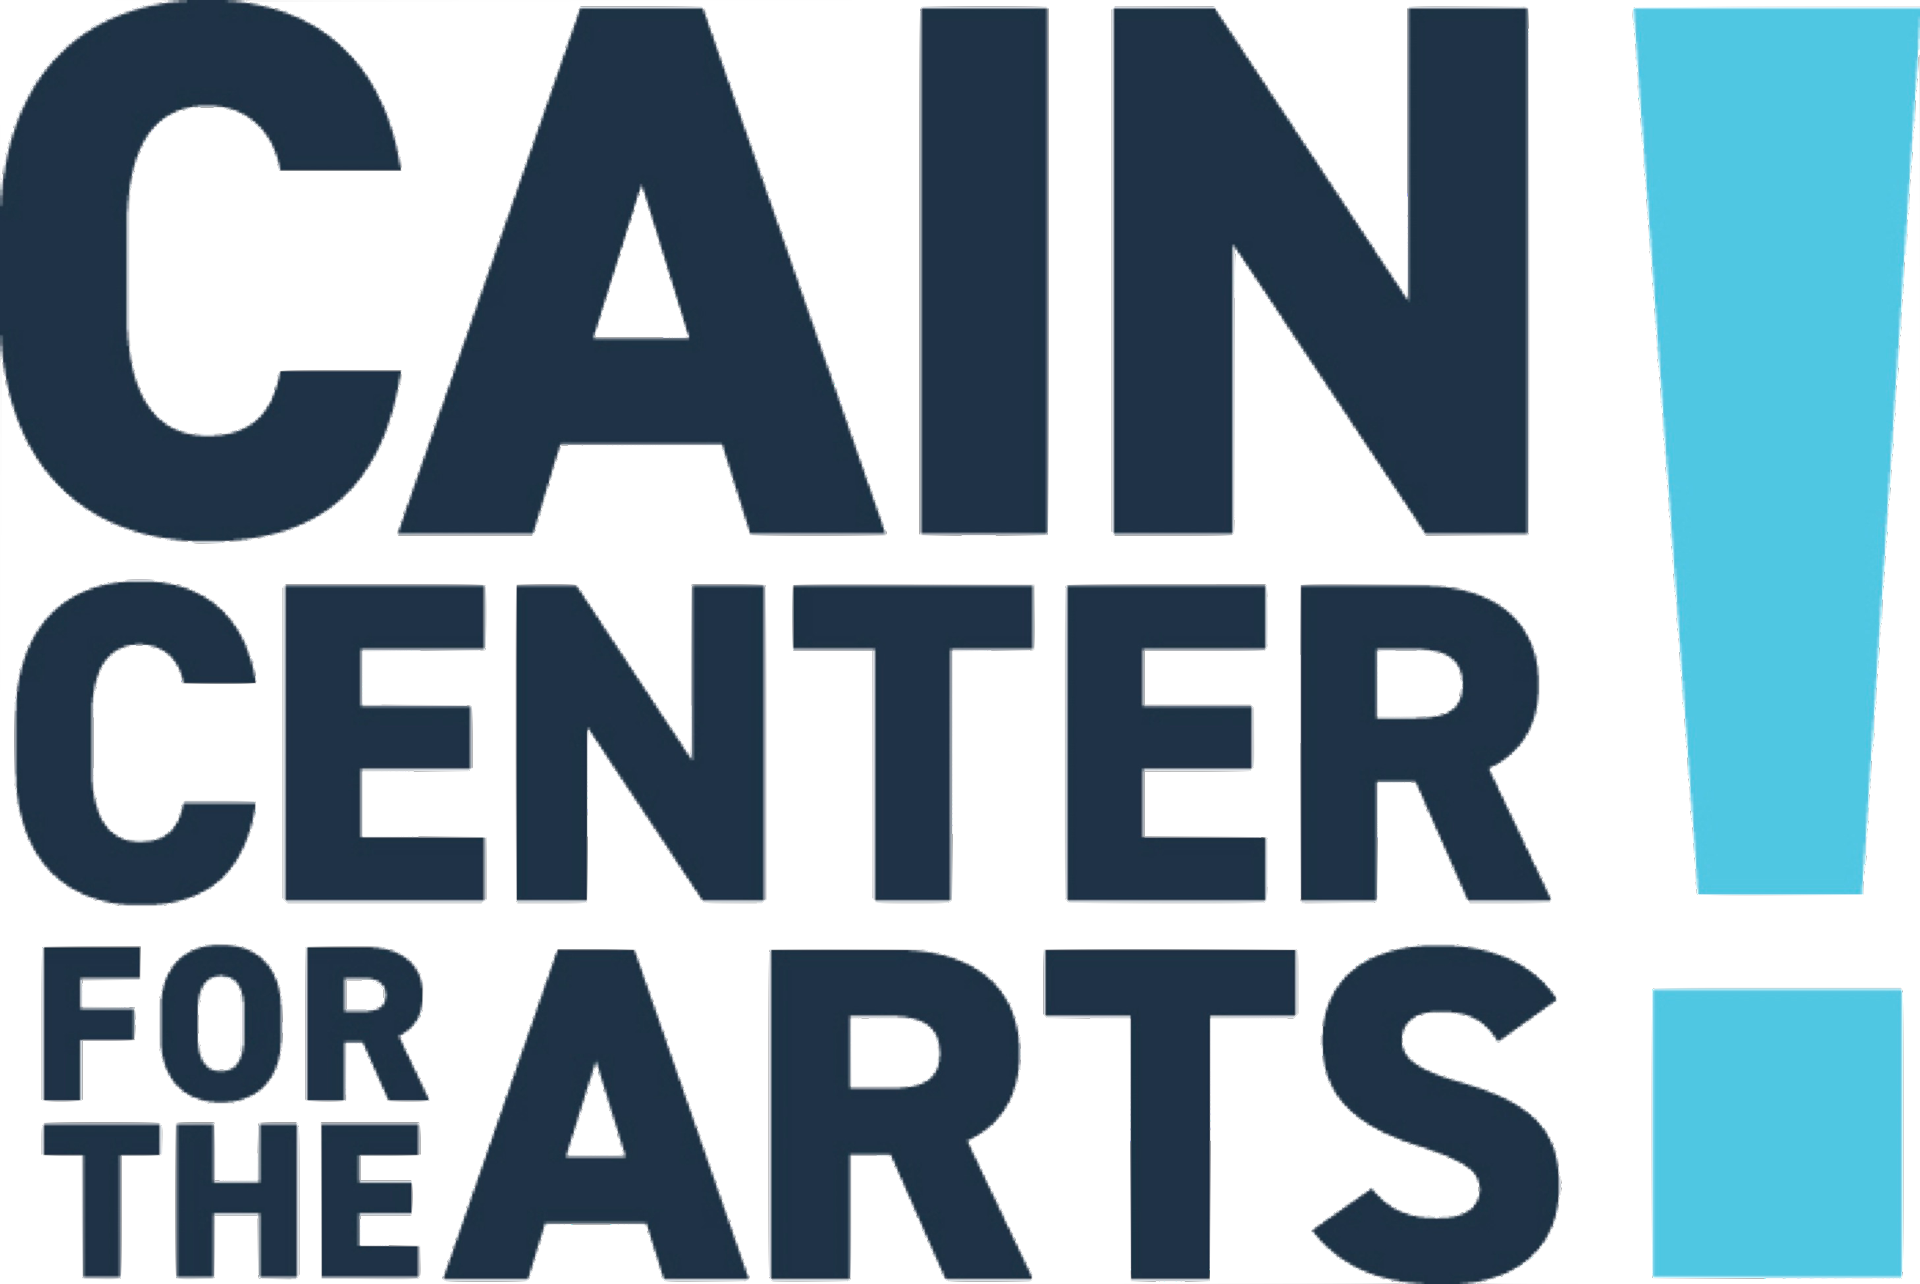 Cain Center for the Arts! Logo